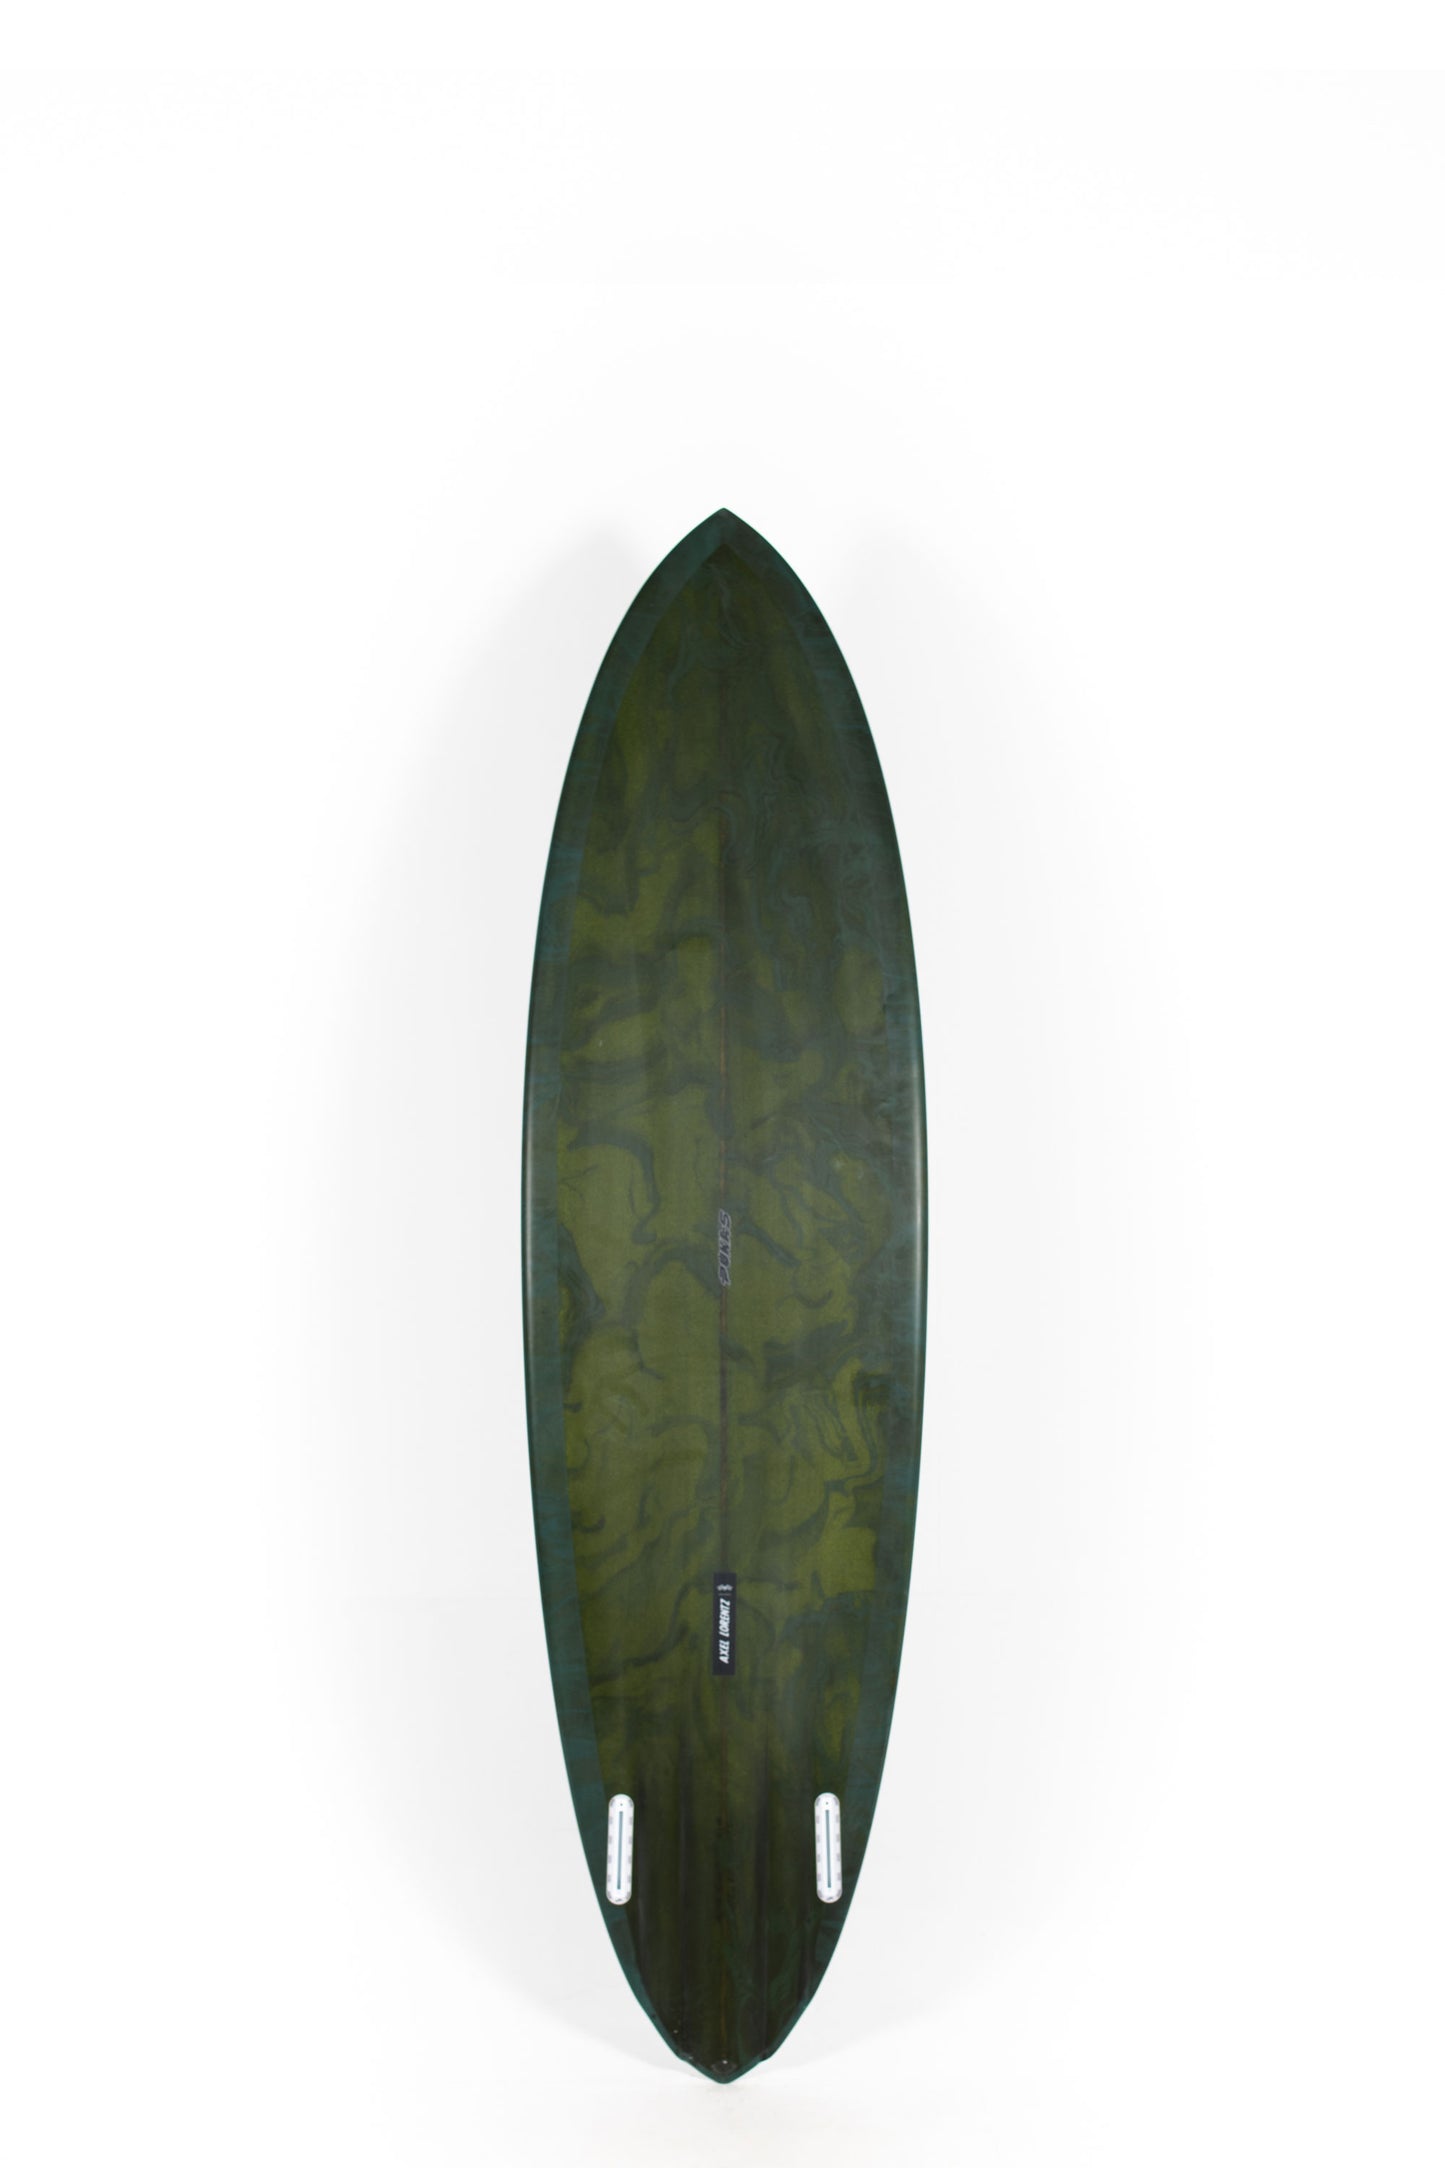 Pukas Surf Shop - Pukas Surfboard - LADY TWIN by Axel Lorentz - 7’0” x 21,25 x 2,94 - 46L - AX09166